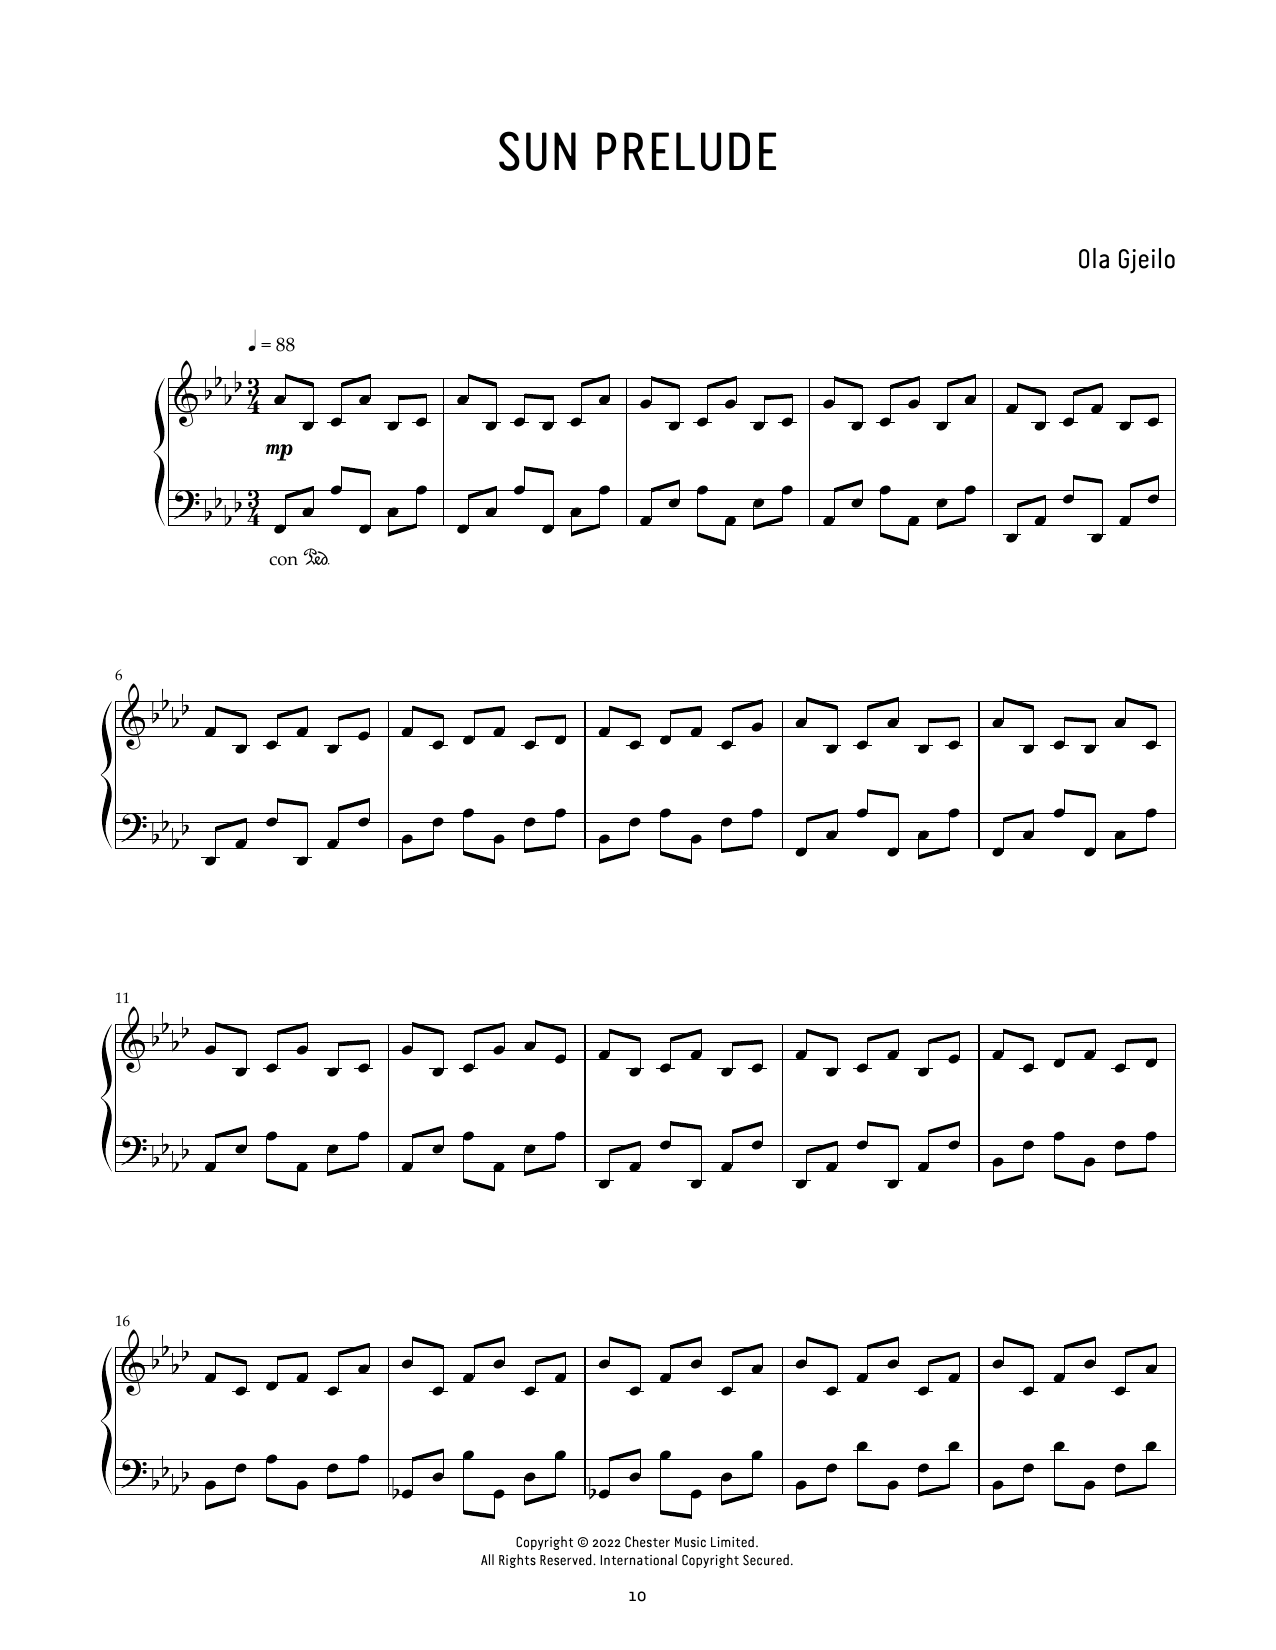 Ola Gjeilo Sun Prelude Sheet Music Notes & Chords for Piano Solo - Download or Print PDF